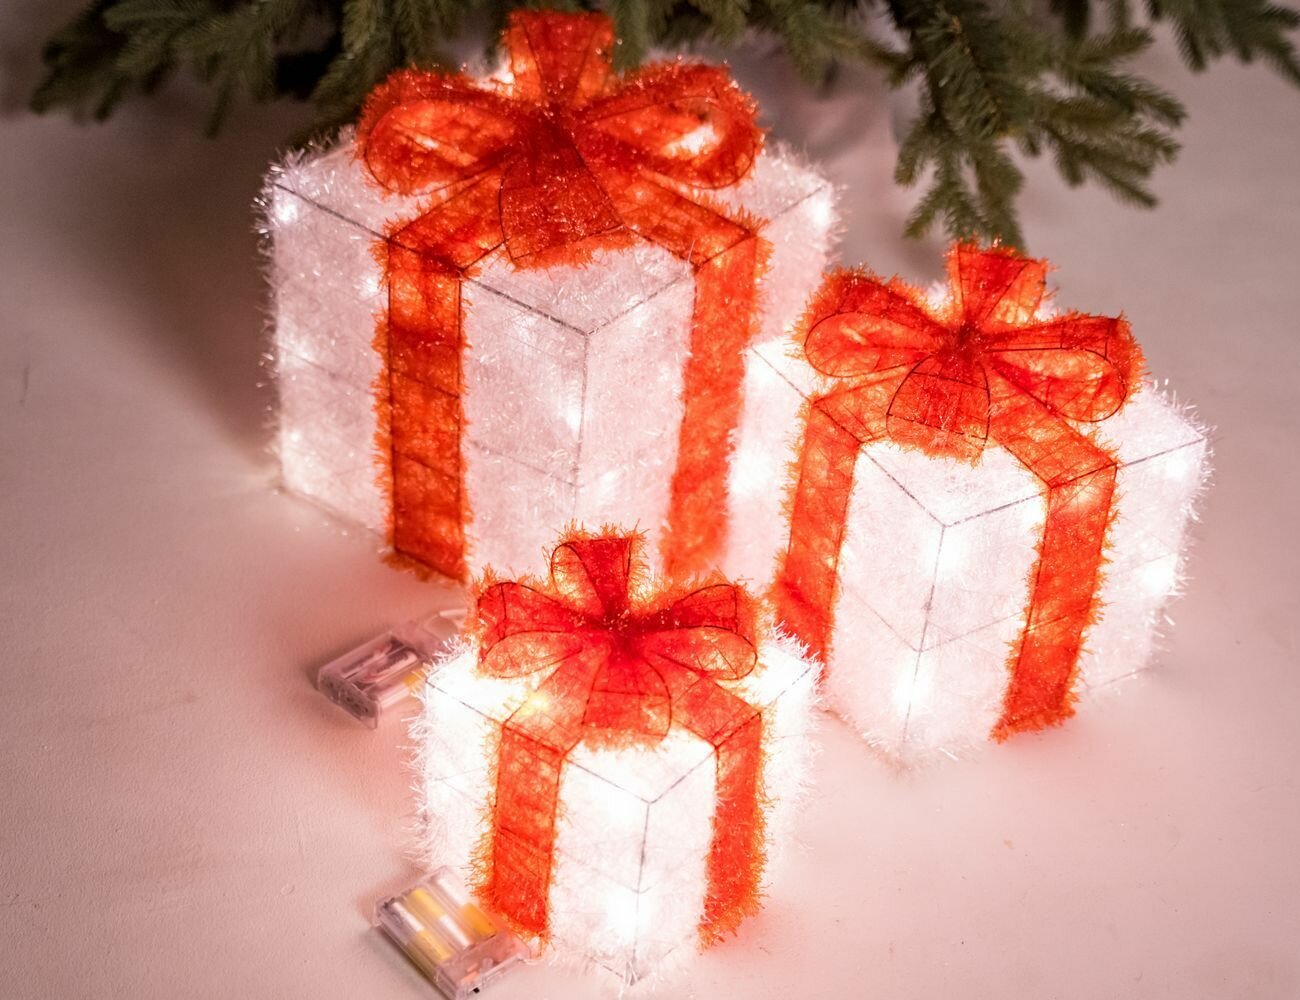 Kaemingk (Lumineo), Светящиеся подарочные коробки труа кадо с алыми бантами, тёплые белые LED-огни, 20-30 см, таймер, батарейки 480659